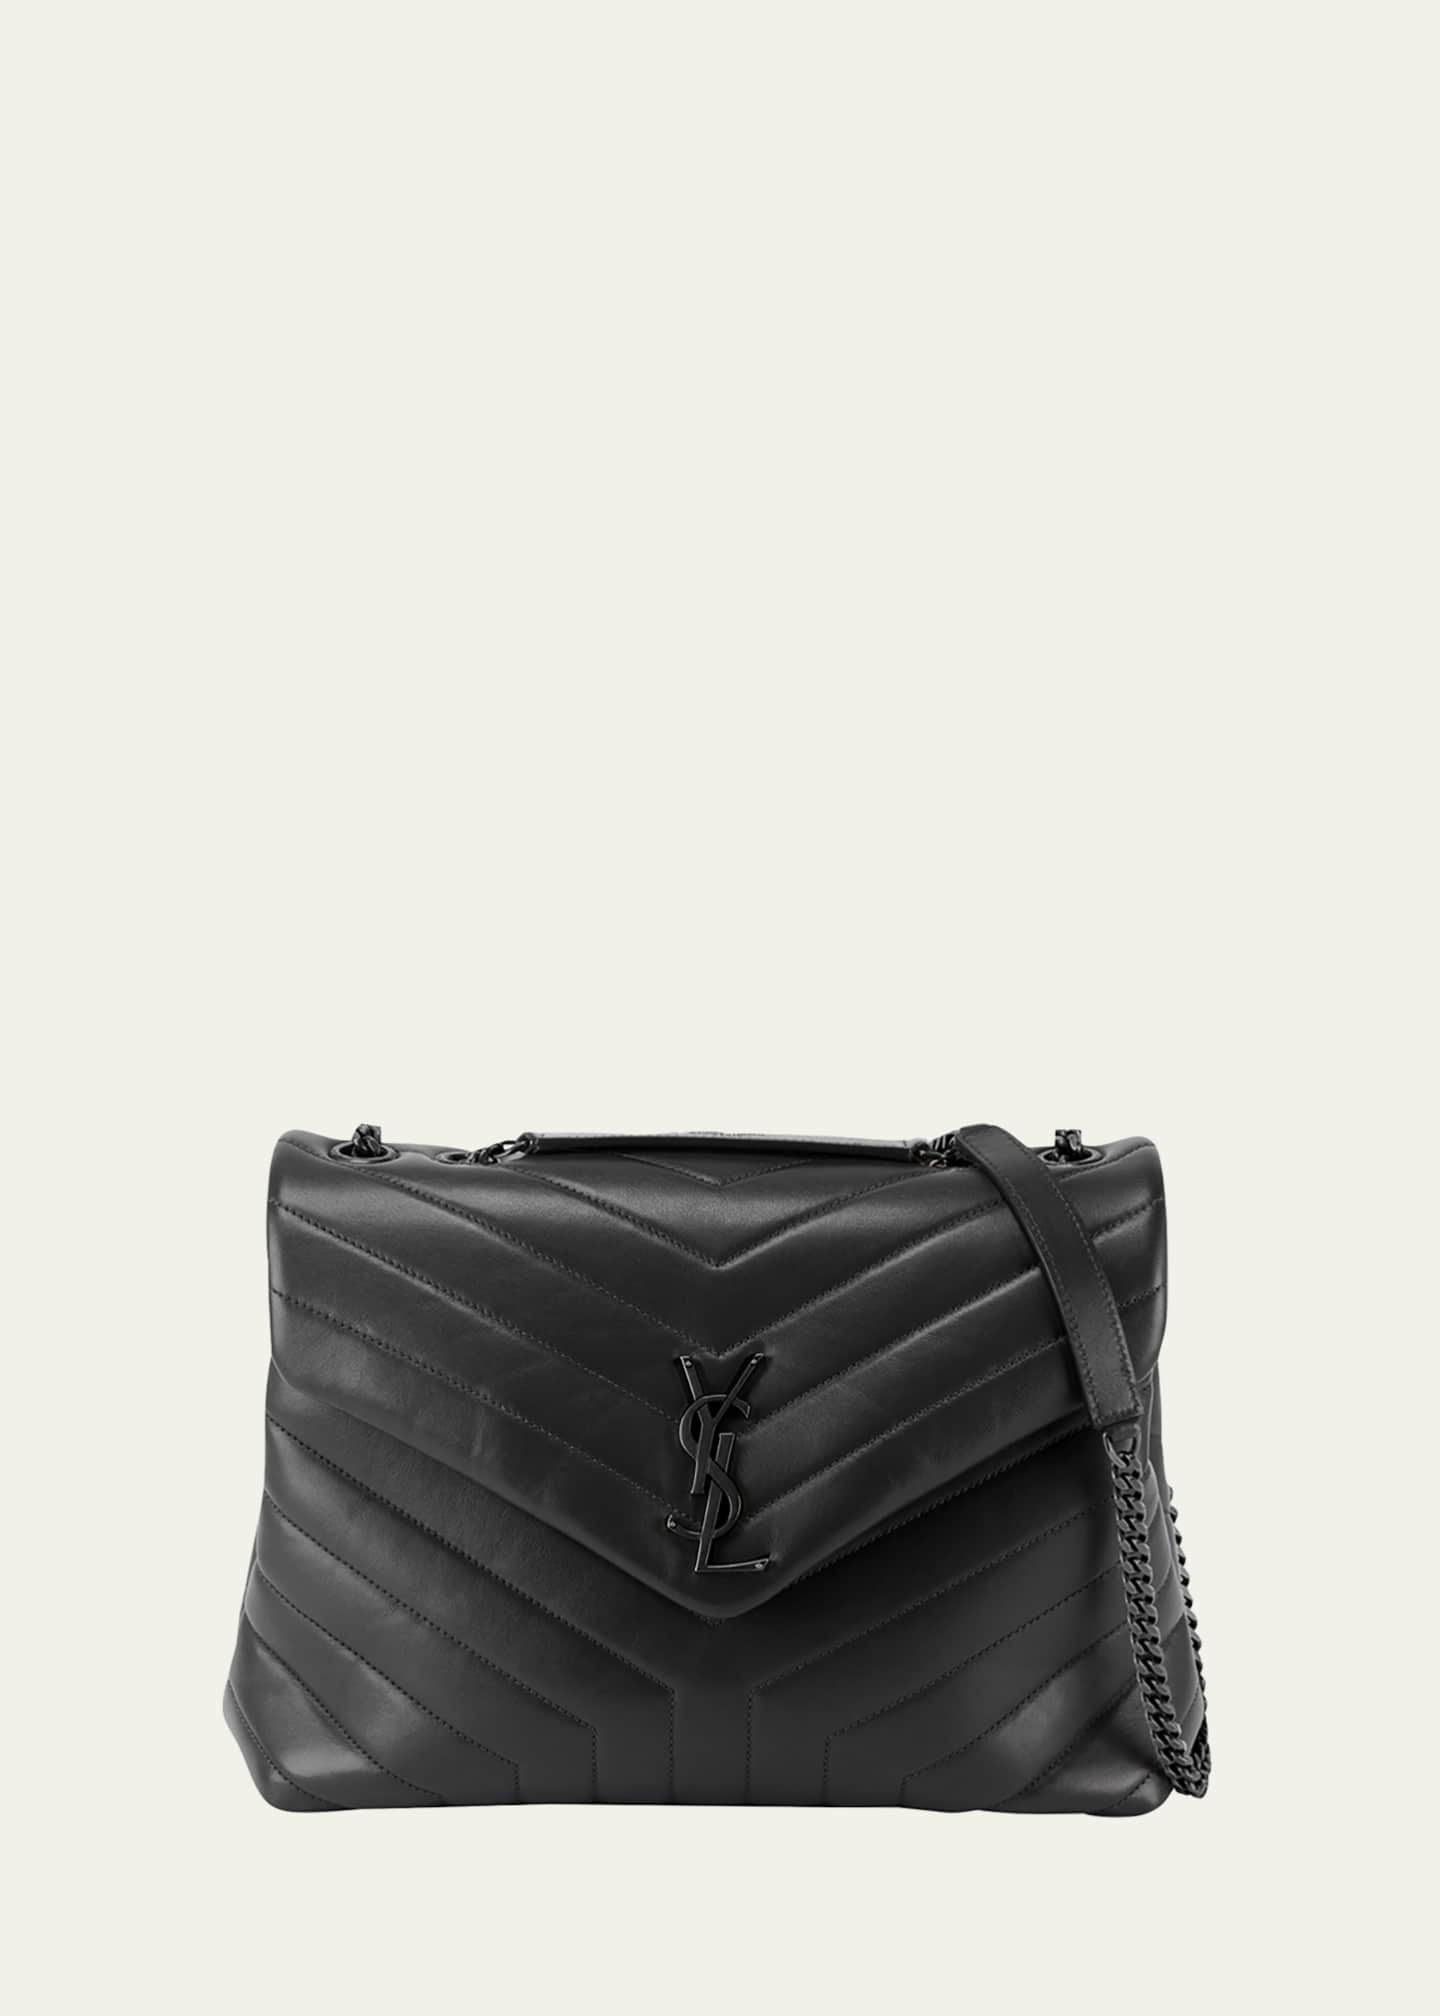 Saint Laurent Loulou Medium YSL Shoulder Bag in Quilted Leather Image 1 of 5